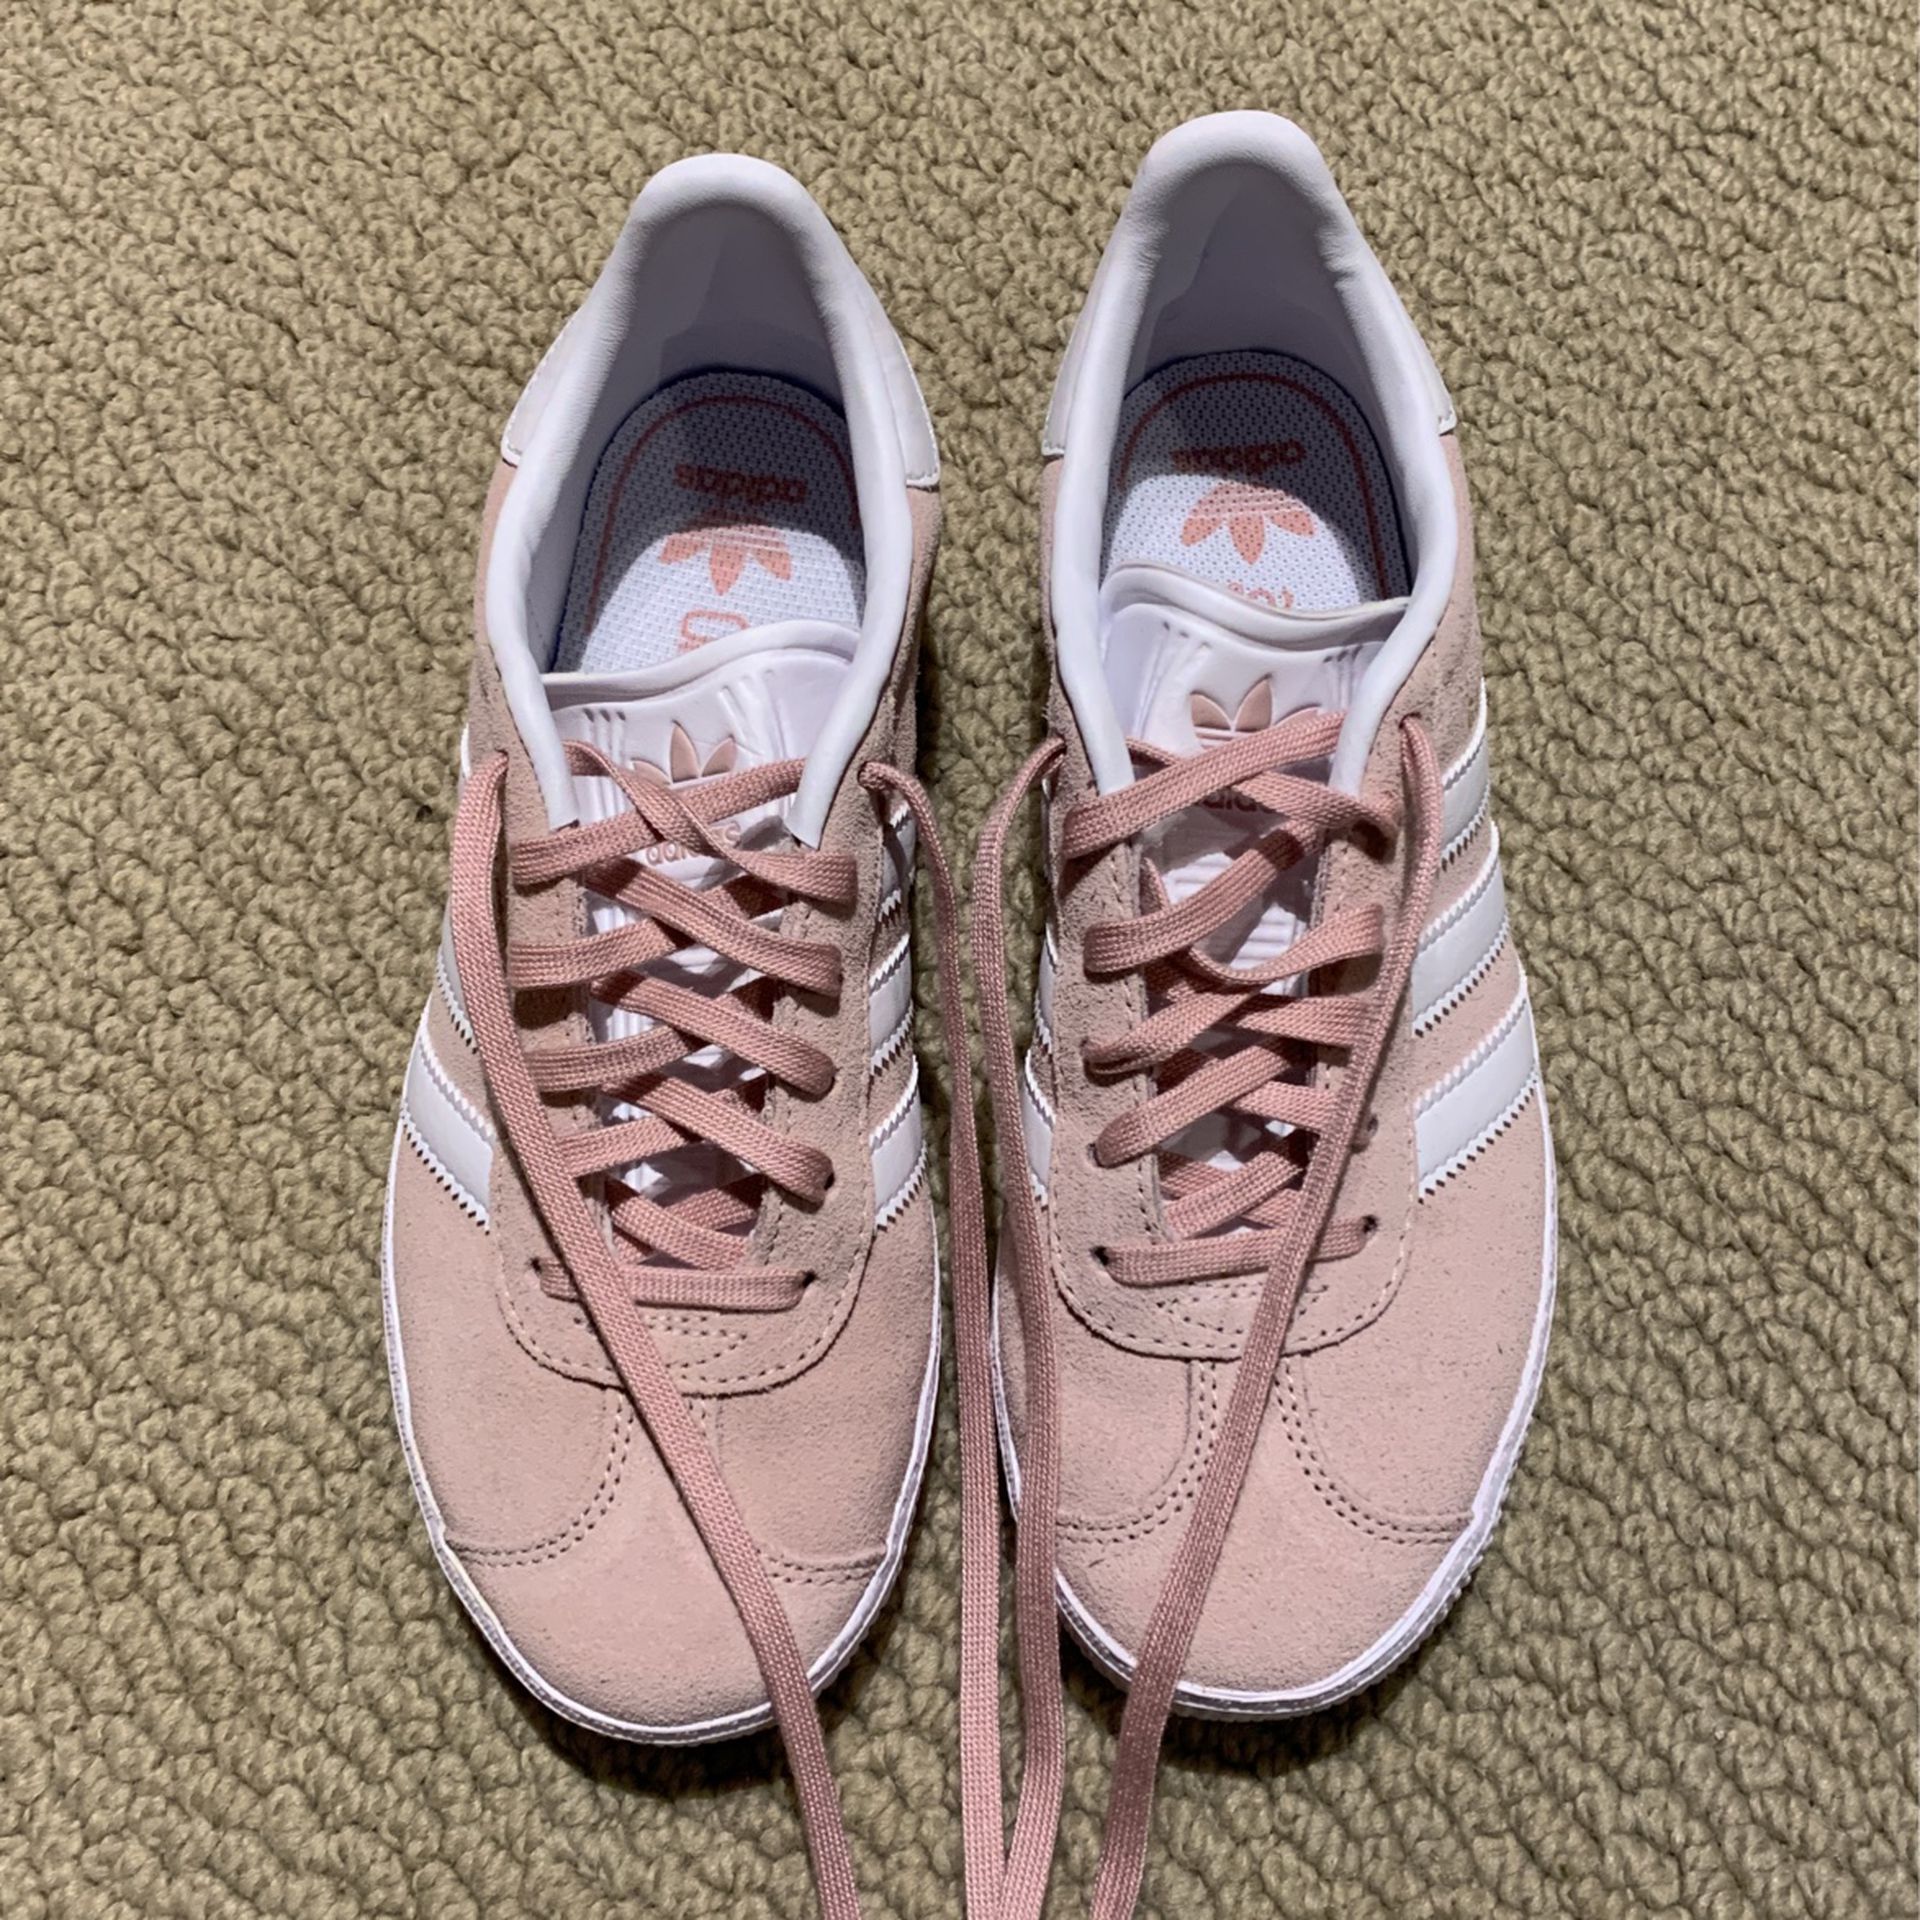 New Pink Suede Girls Adidas Gazelle Sneaker Size 2.5 